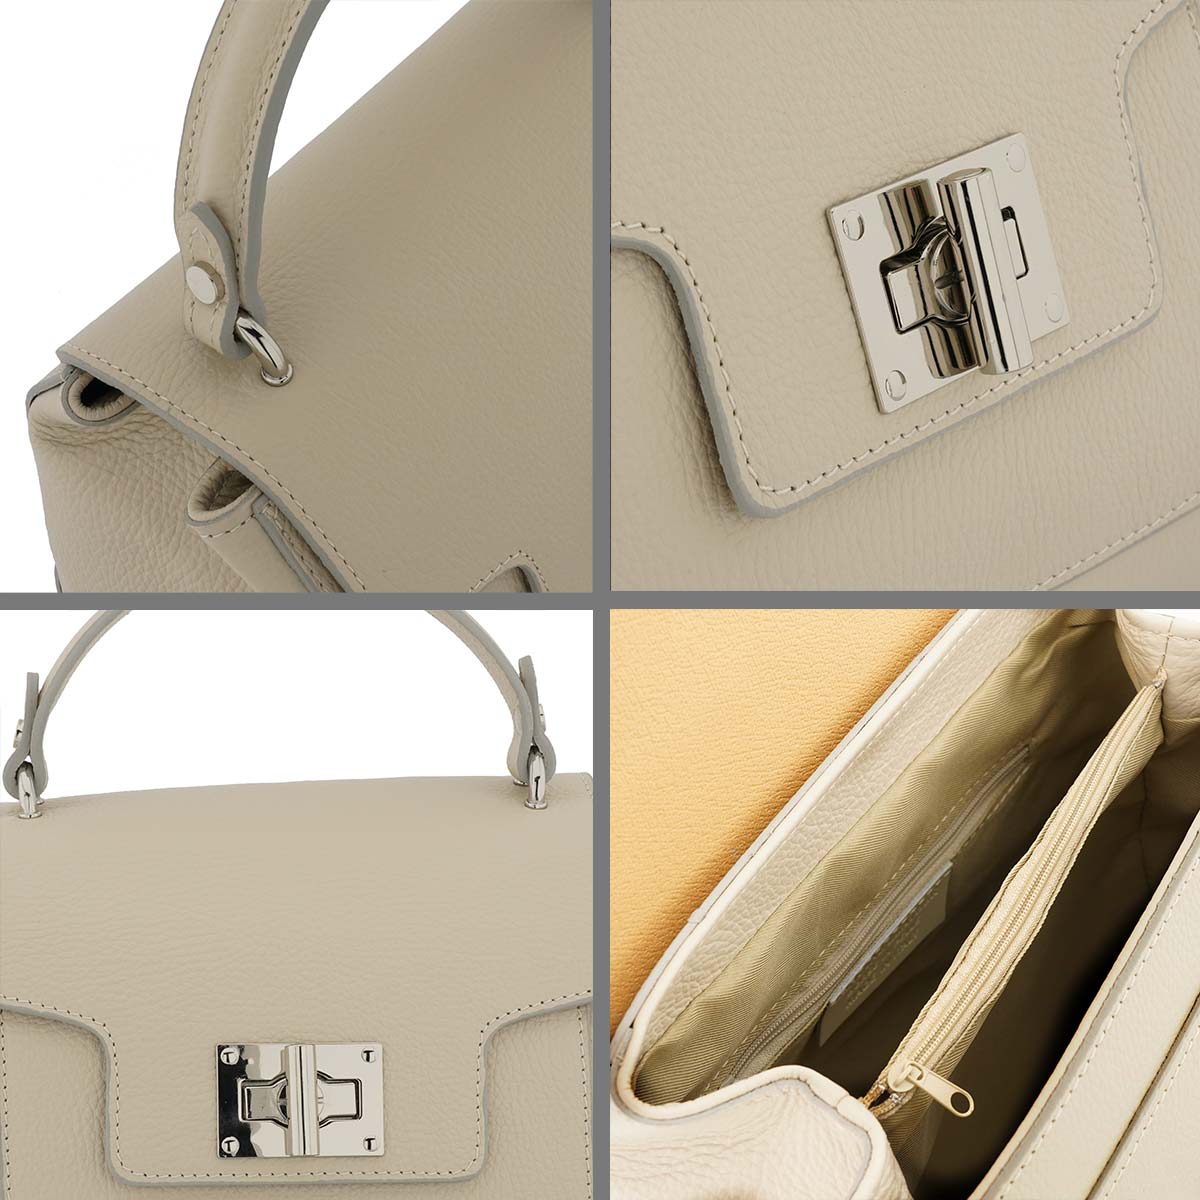 Fioretta Italian Genuine Leather Satchel Top Handle Handbag Purse For Women - Beige